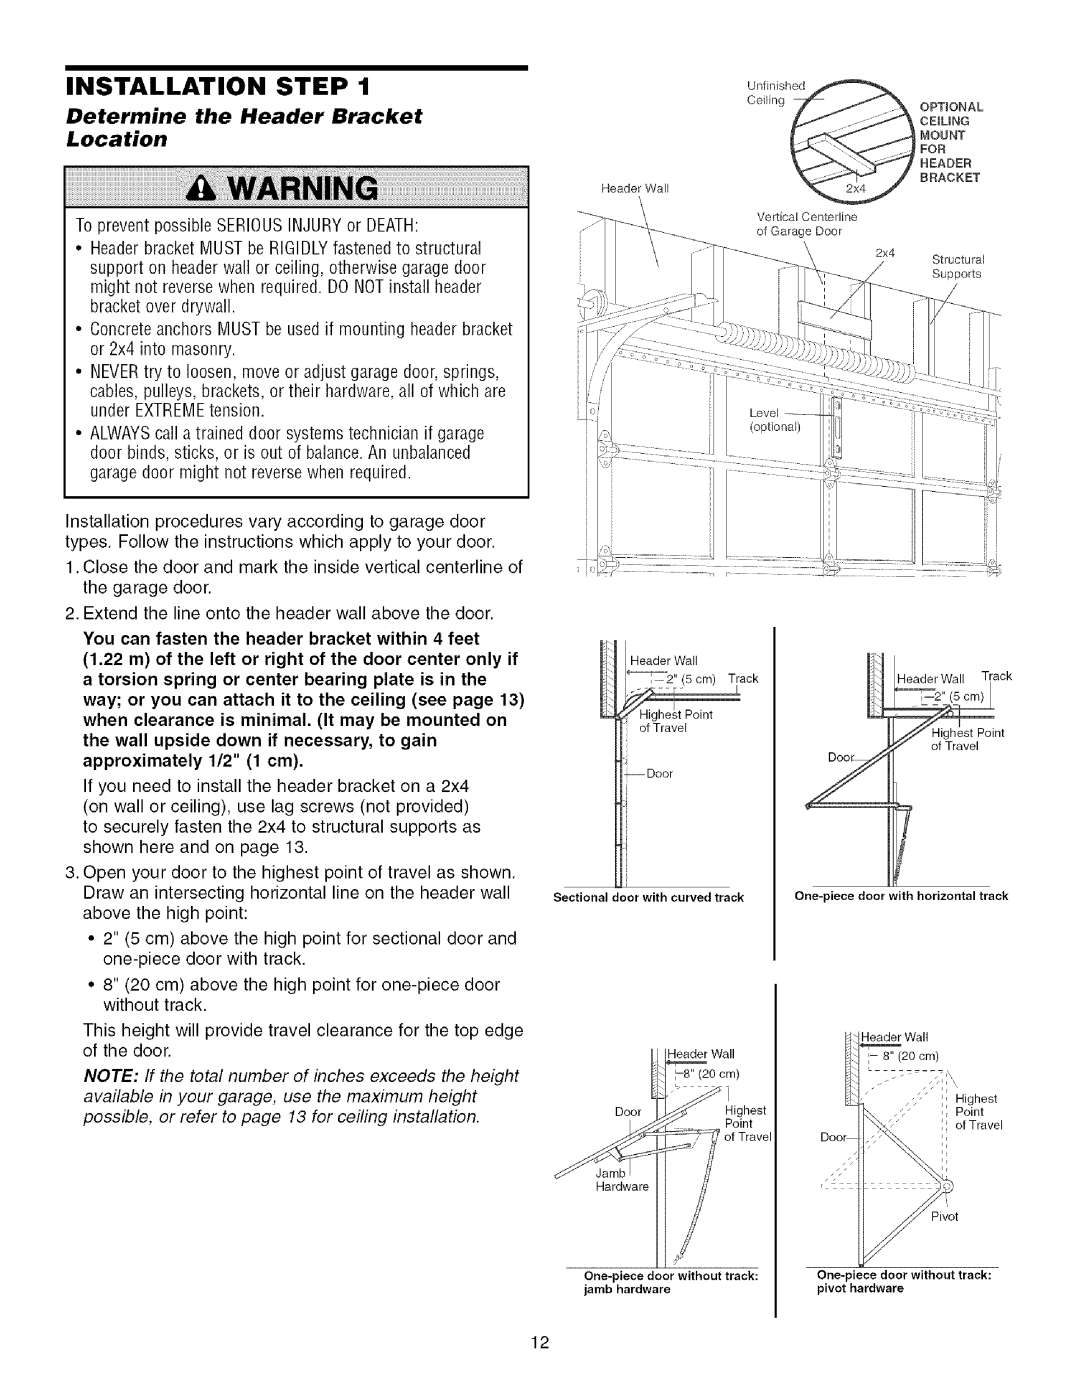 Sears 139.53930D owner manual Installation Step, Determine the Header Bracket Location 